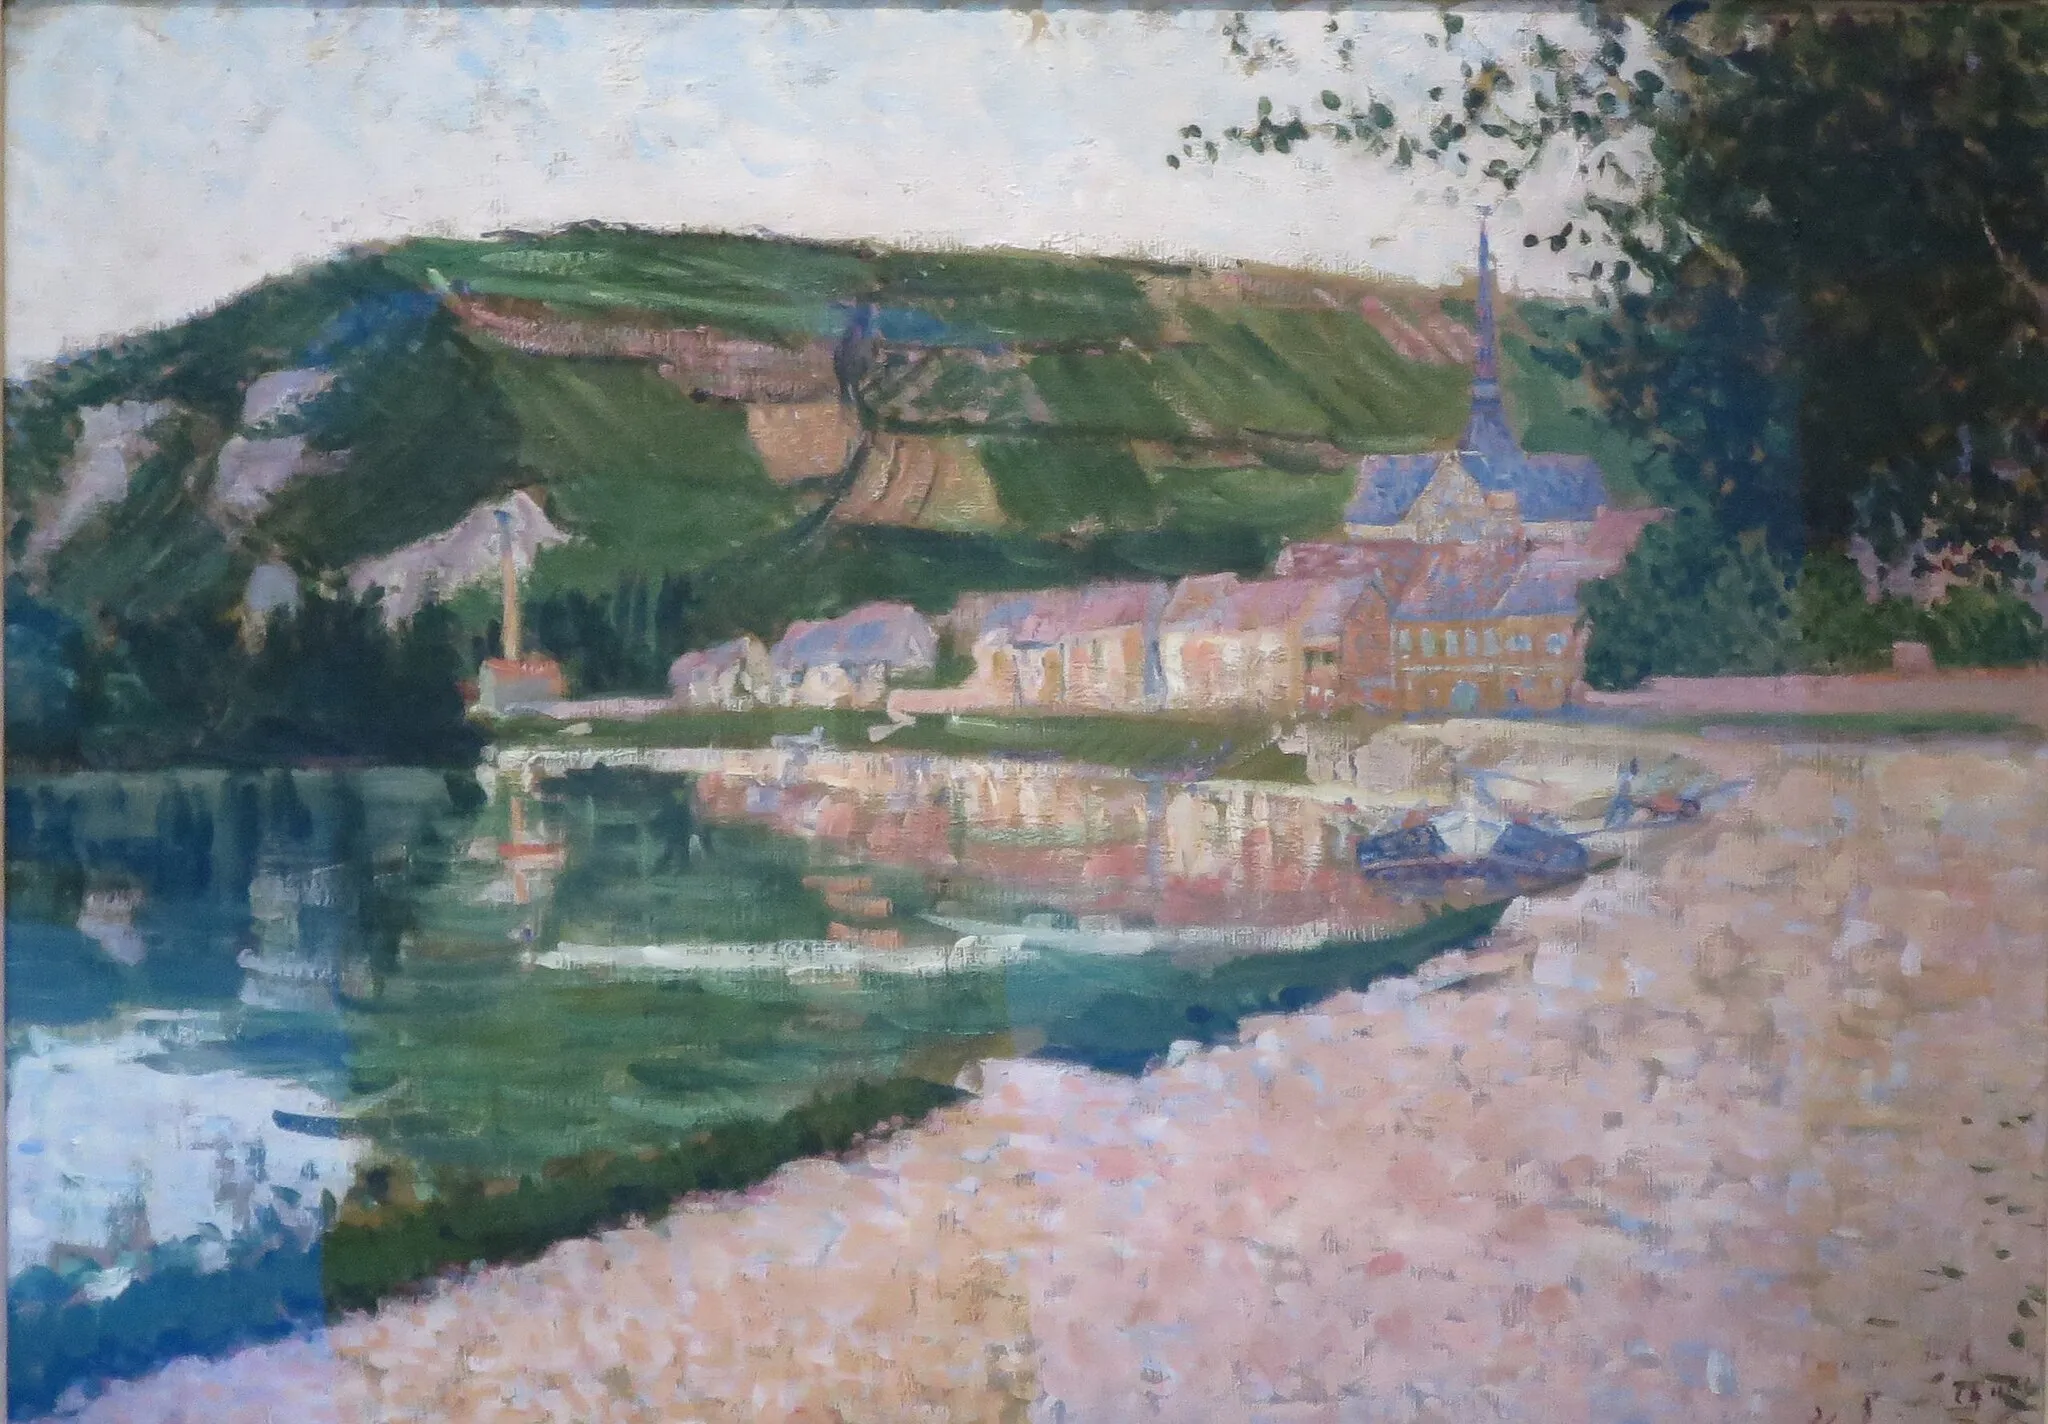 Photo showing: The Seine at Les Andelys by Paul Signac, 1886, oil on canvas, Norton Simon Museum